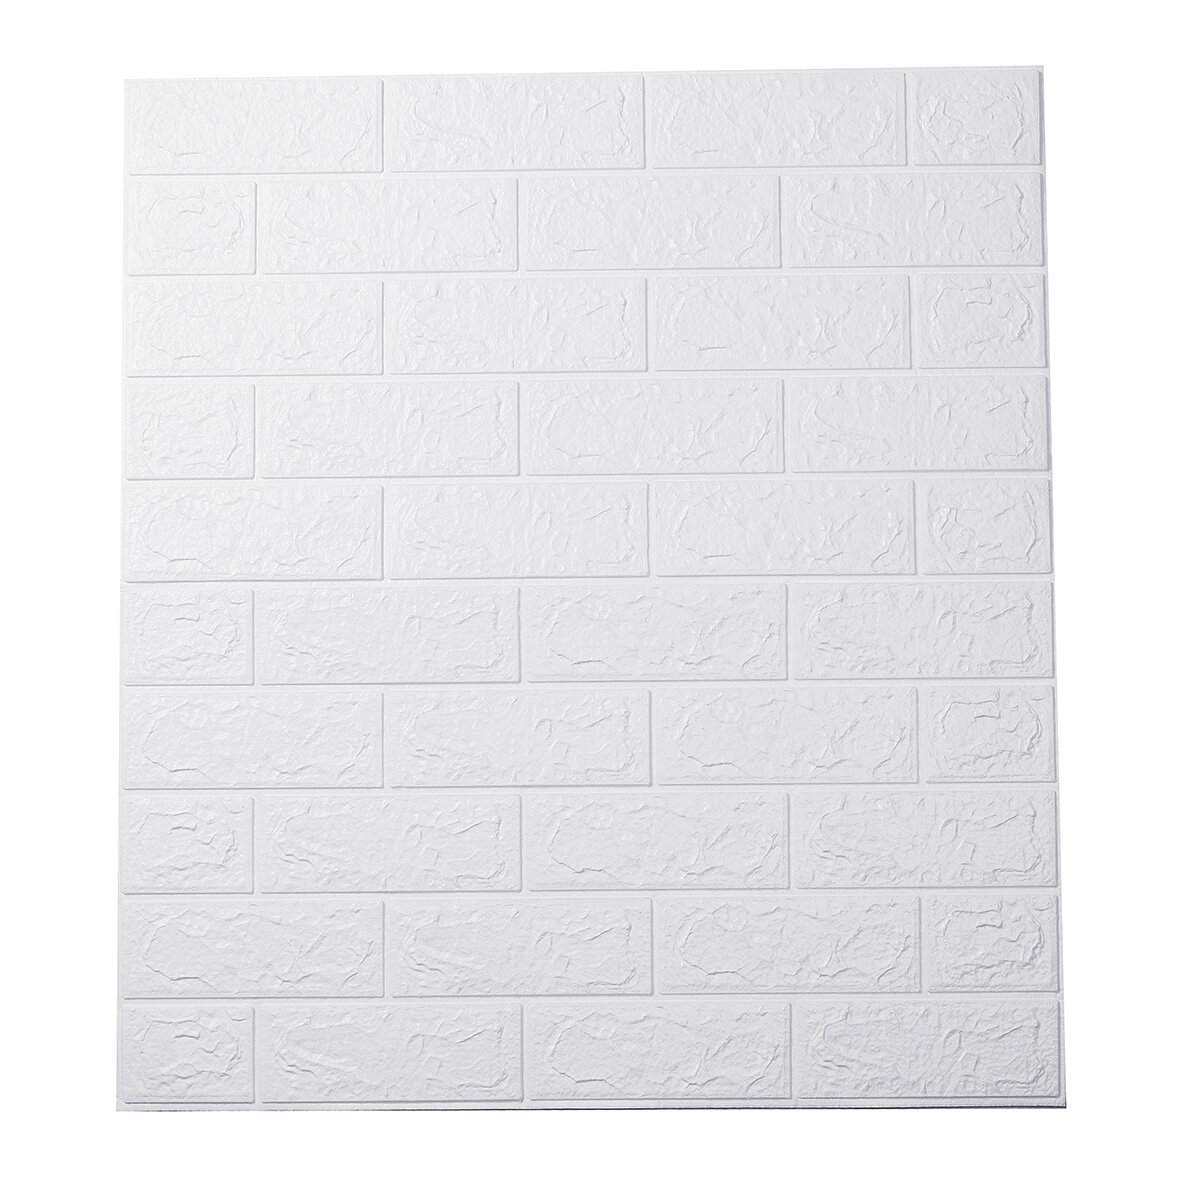 Image of 3D Wall Sticker Self-Adhesive Wall Panels Waterproof PE Foam White Wallpaper